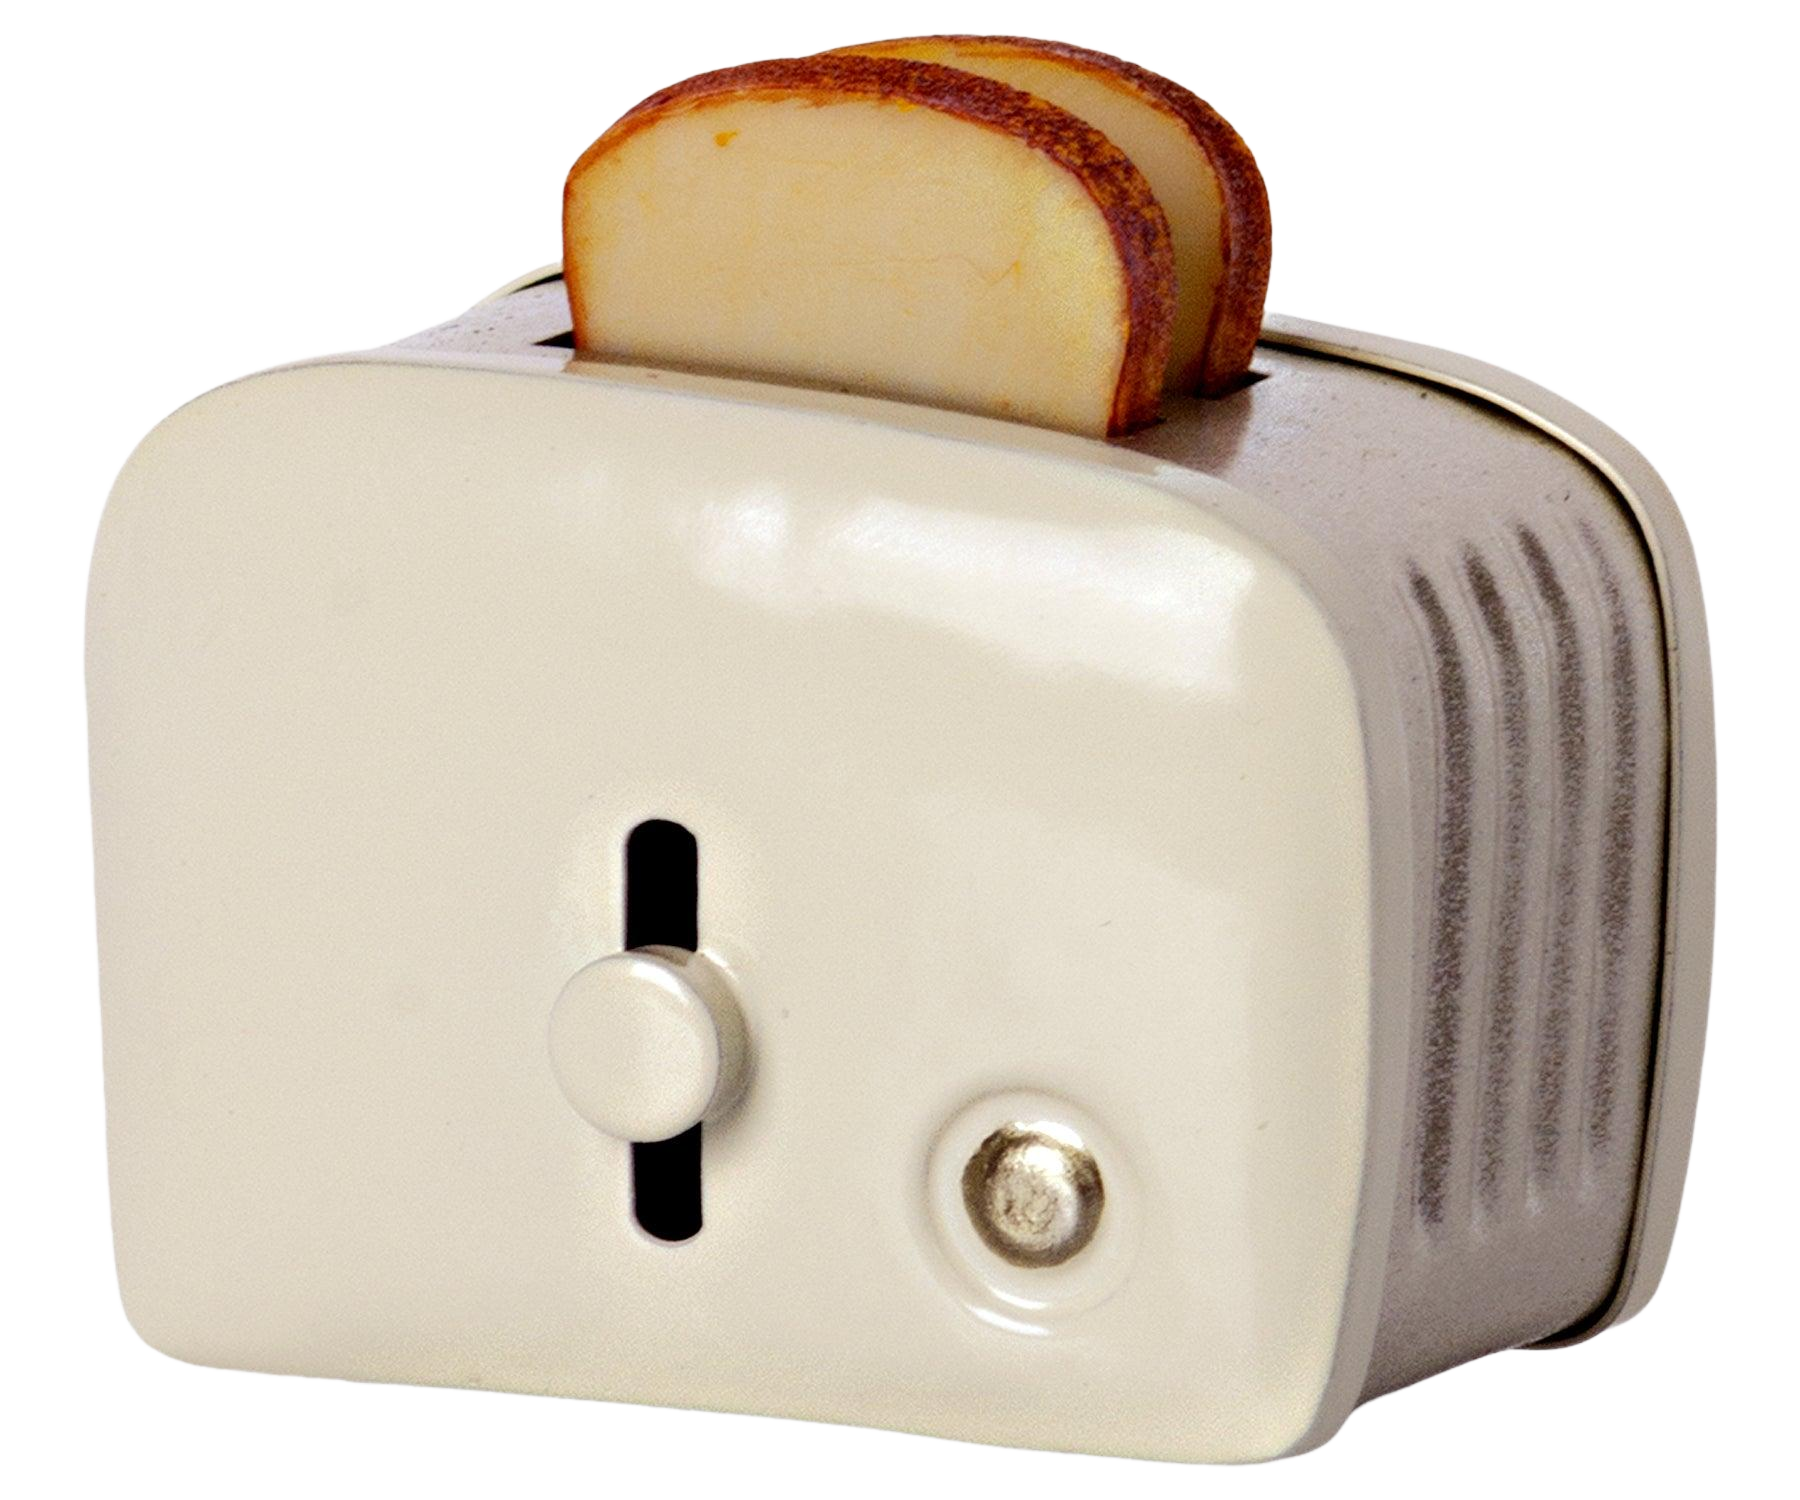 Elf Prop Miniature Kitchen Toaster 2 Slices of Bread Jelly Jar -  Norway